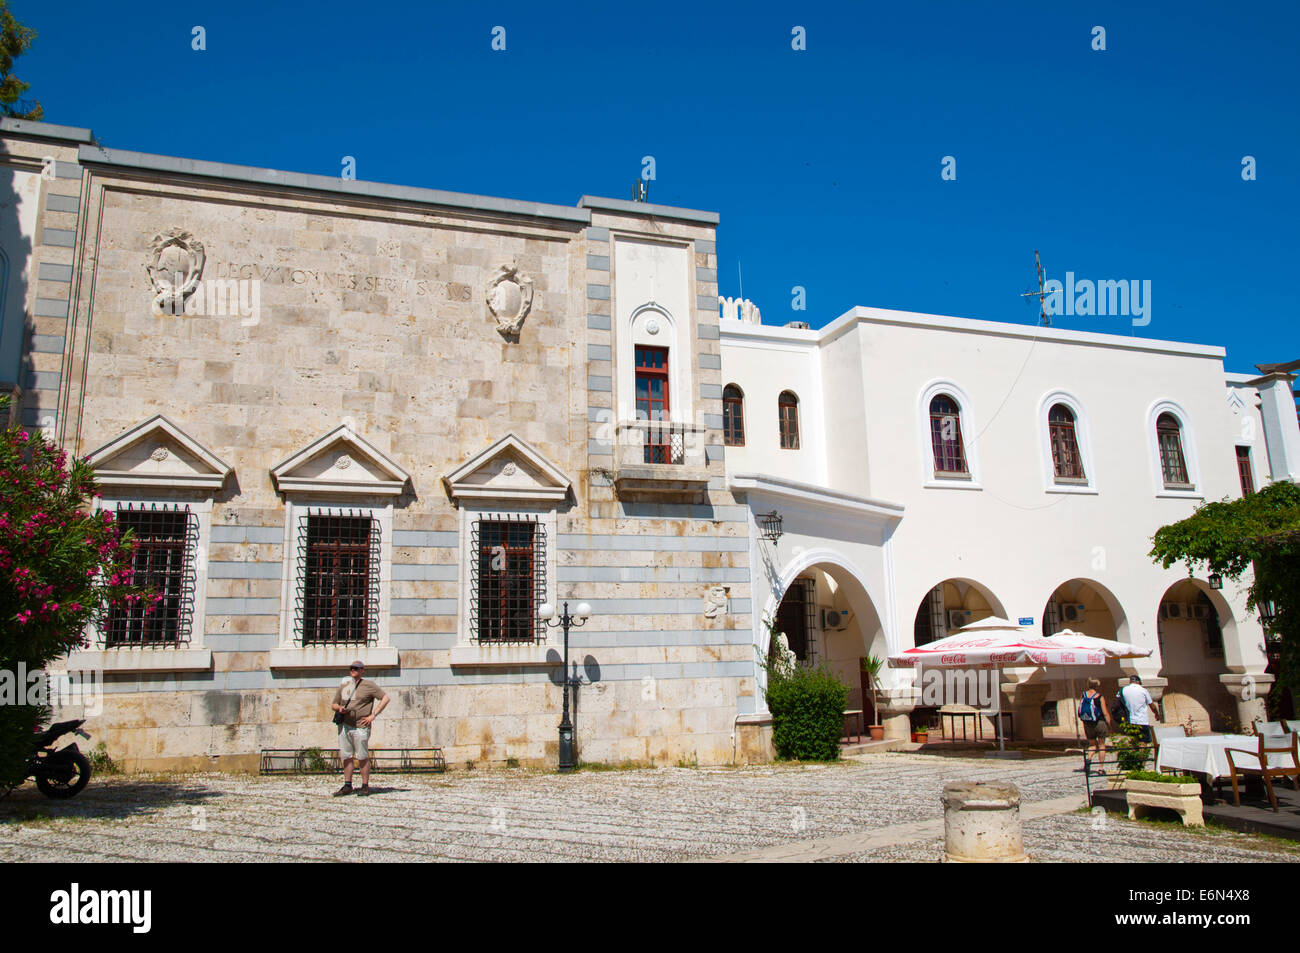 Platanous, the Hippocrates plane tree square, old town, Kos town, Kos island, Dodecanese islands, Greece, Europe Stock Photo